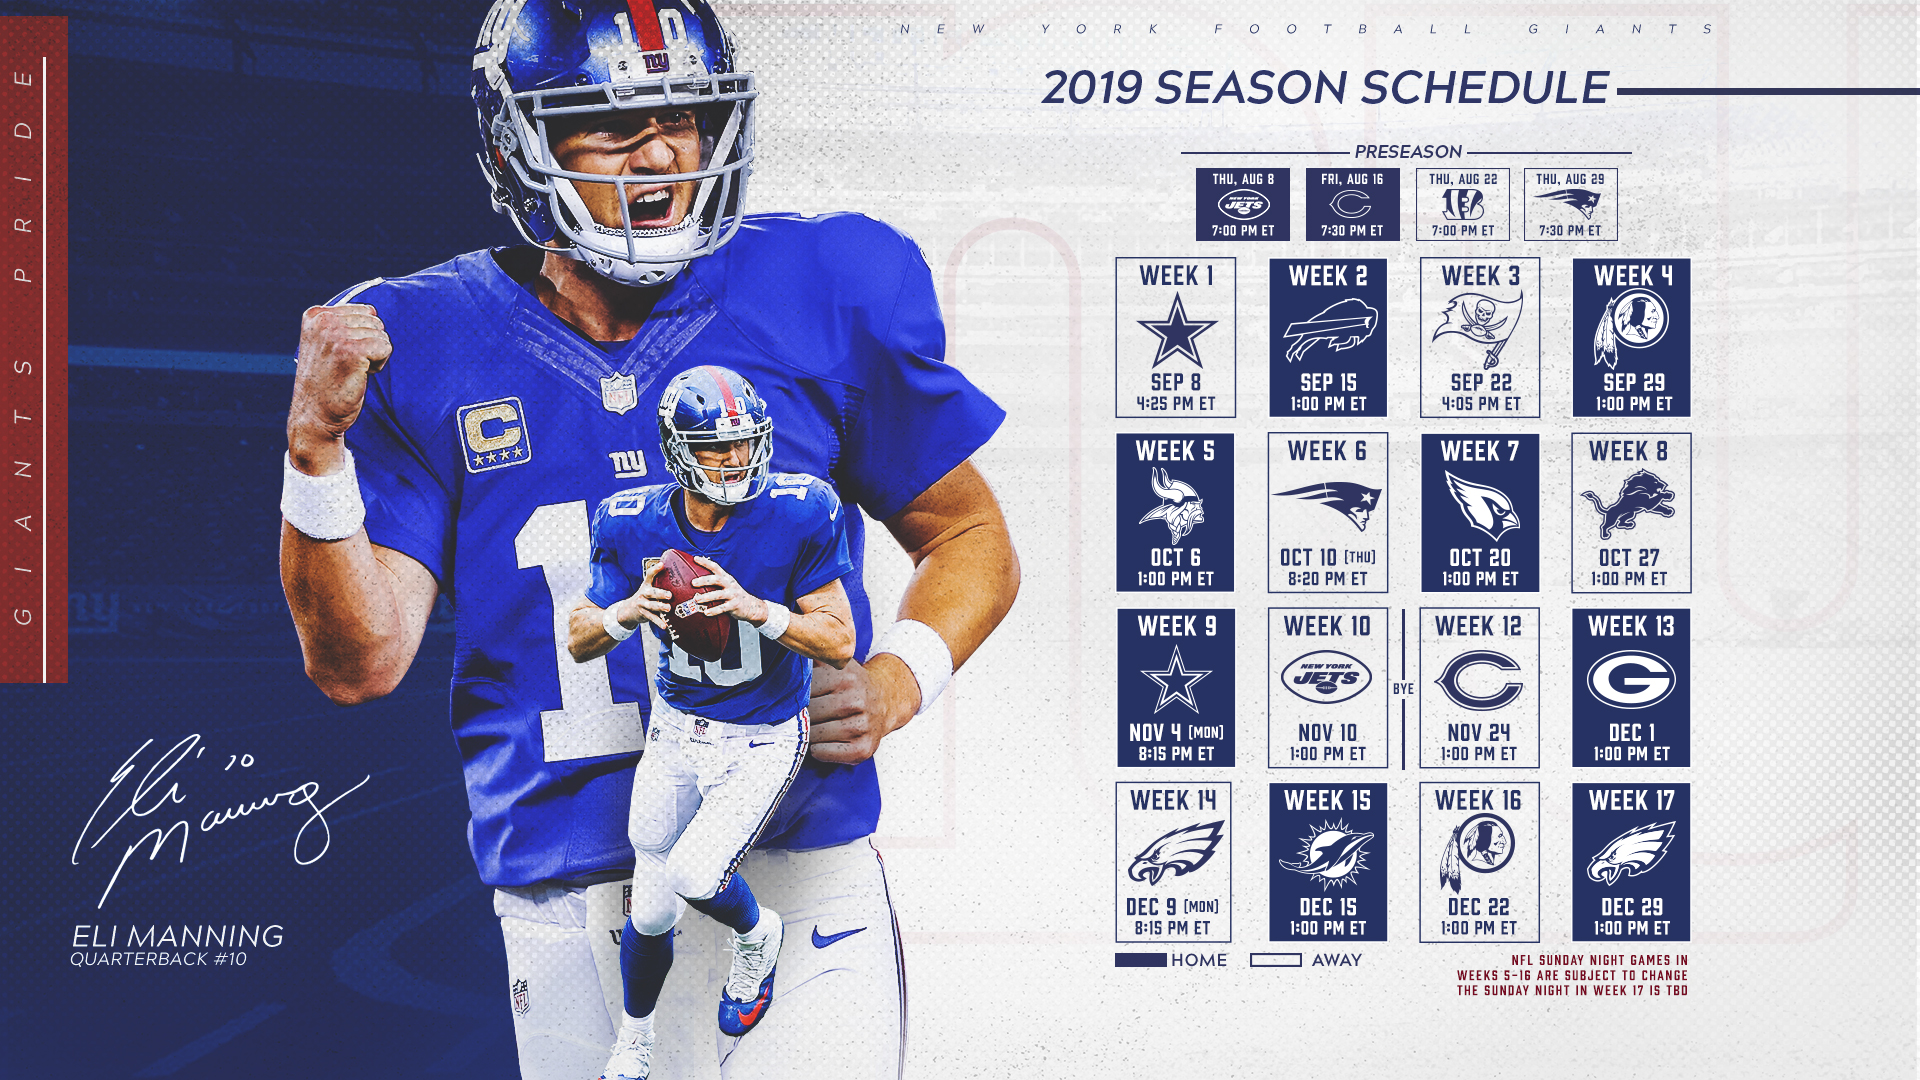 Giants Schedule. New York Giants